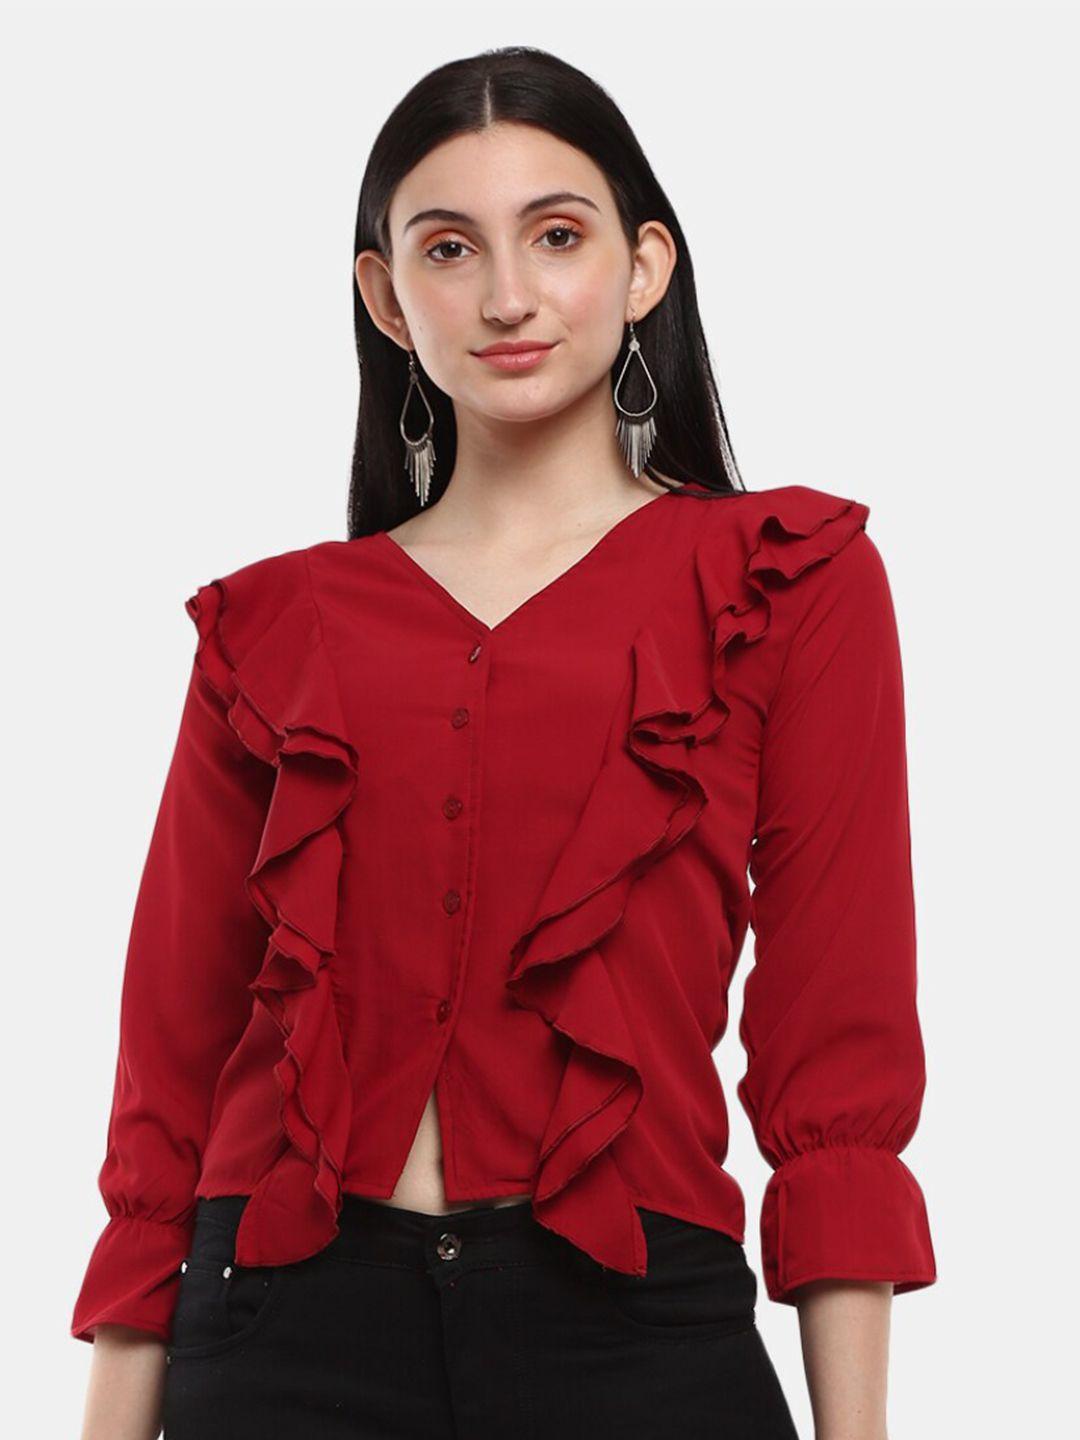 v-mart-women-western-solid-georgette-maroon-ruffles-shirt-style-top